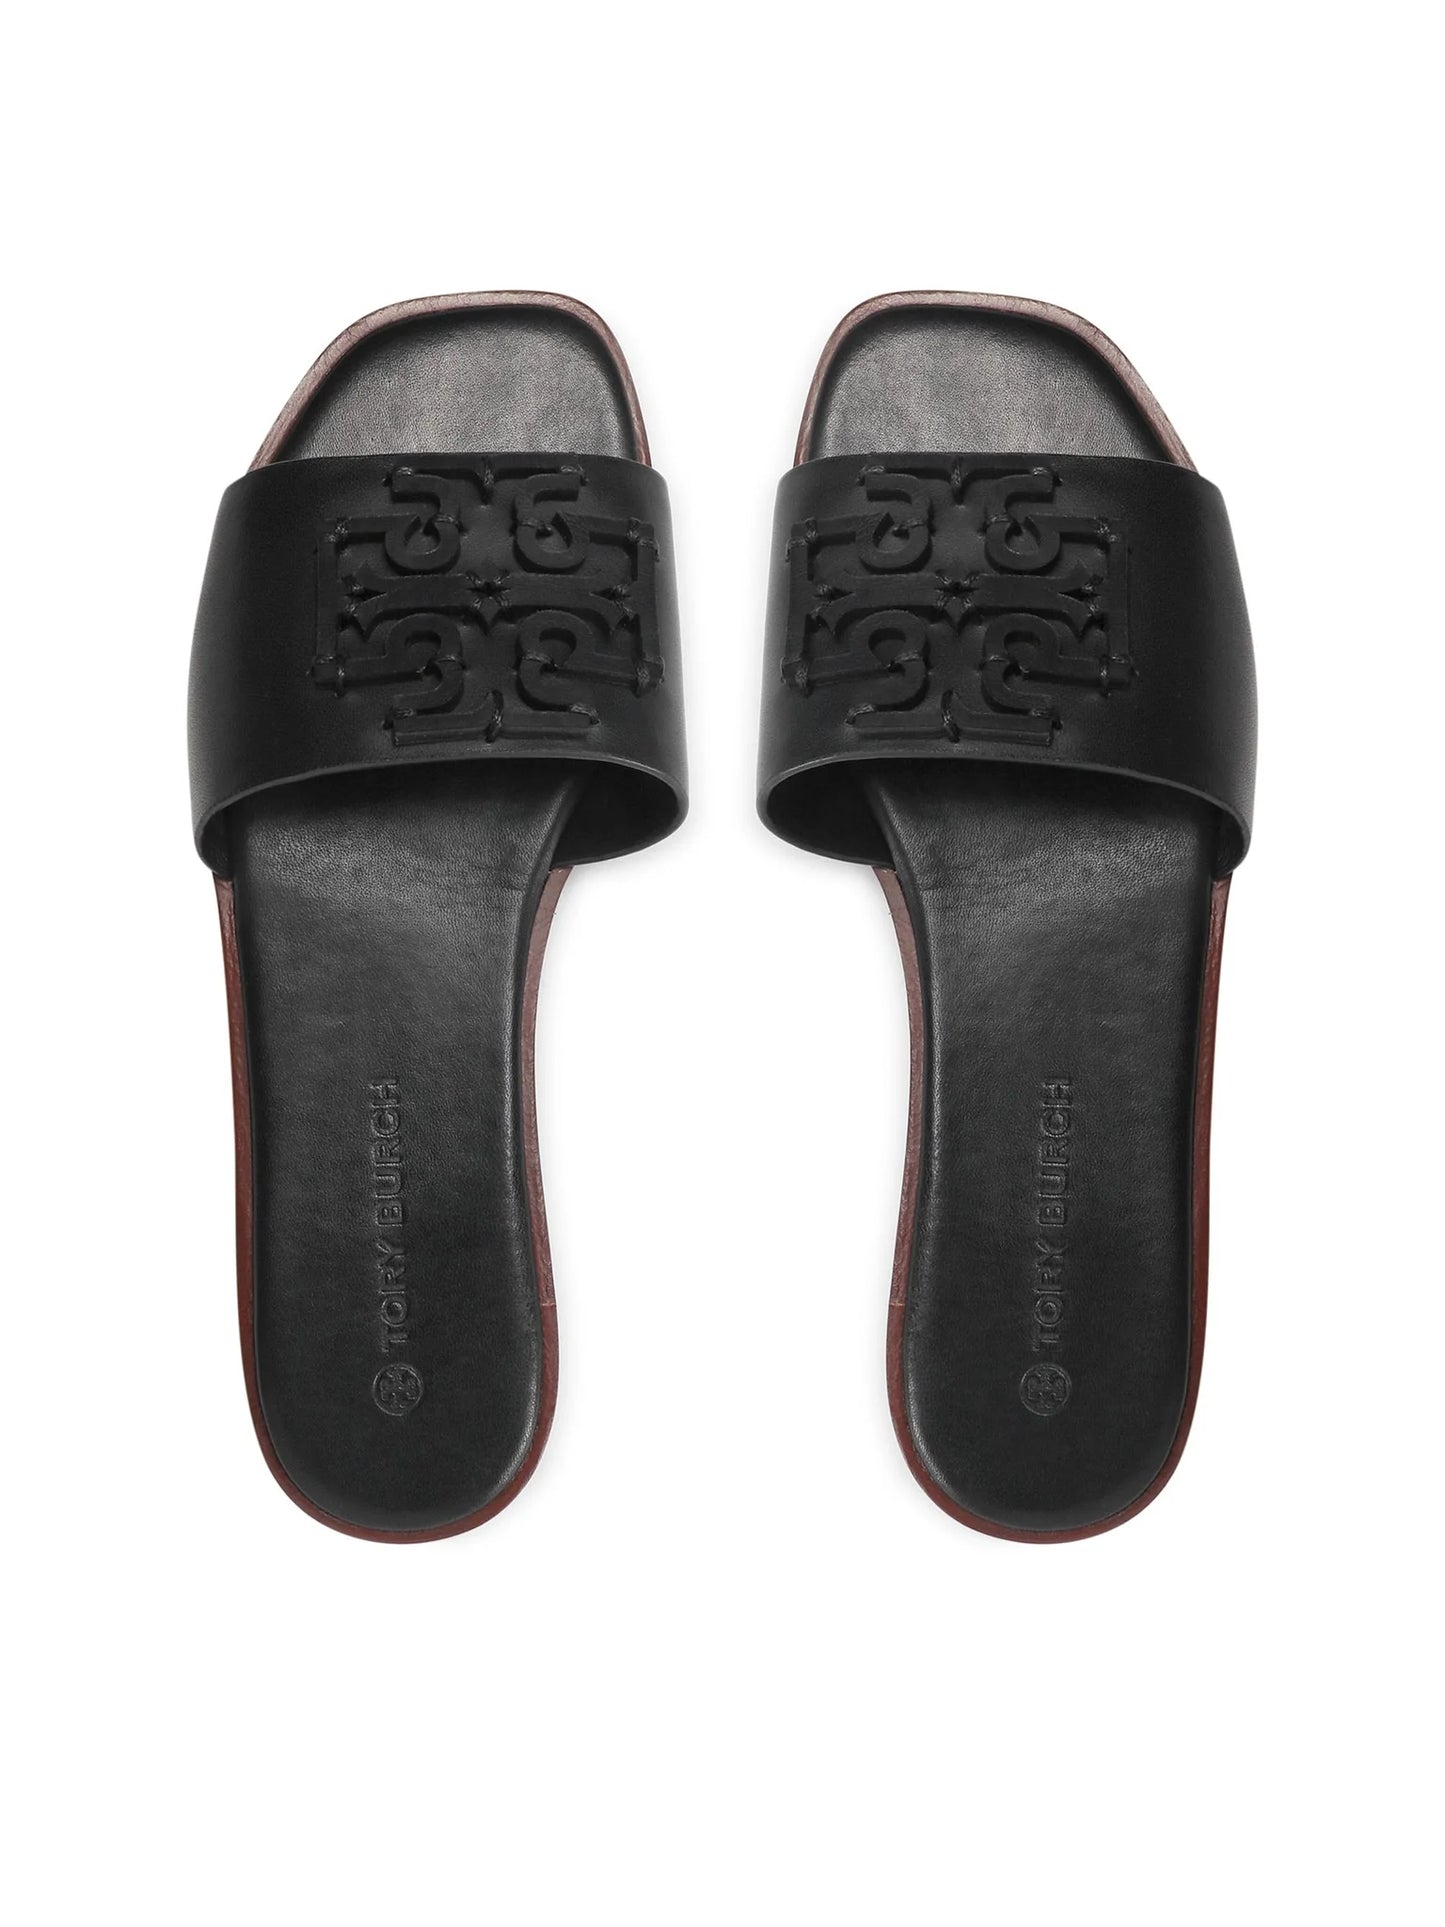 Tory Burch Ines Flat Sandals- Black (7.5)